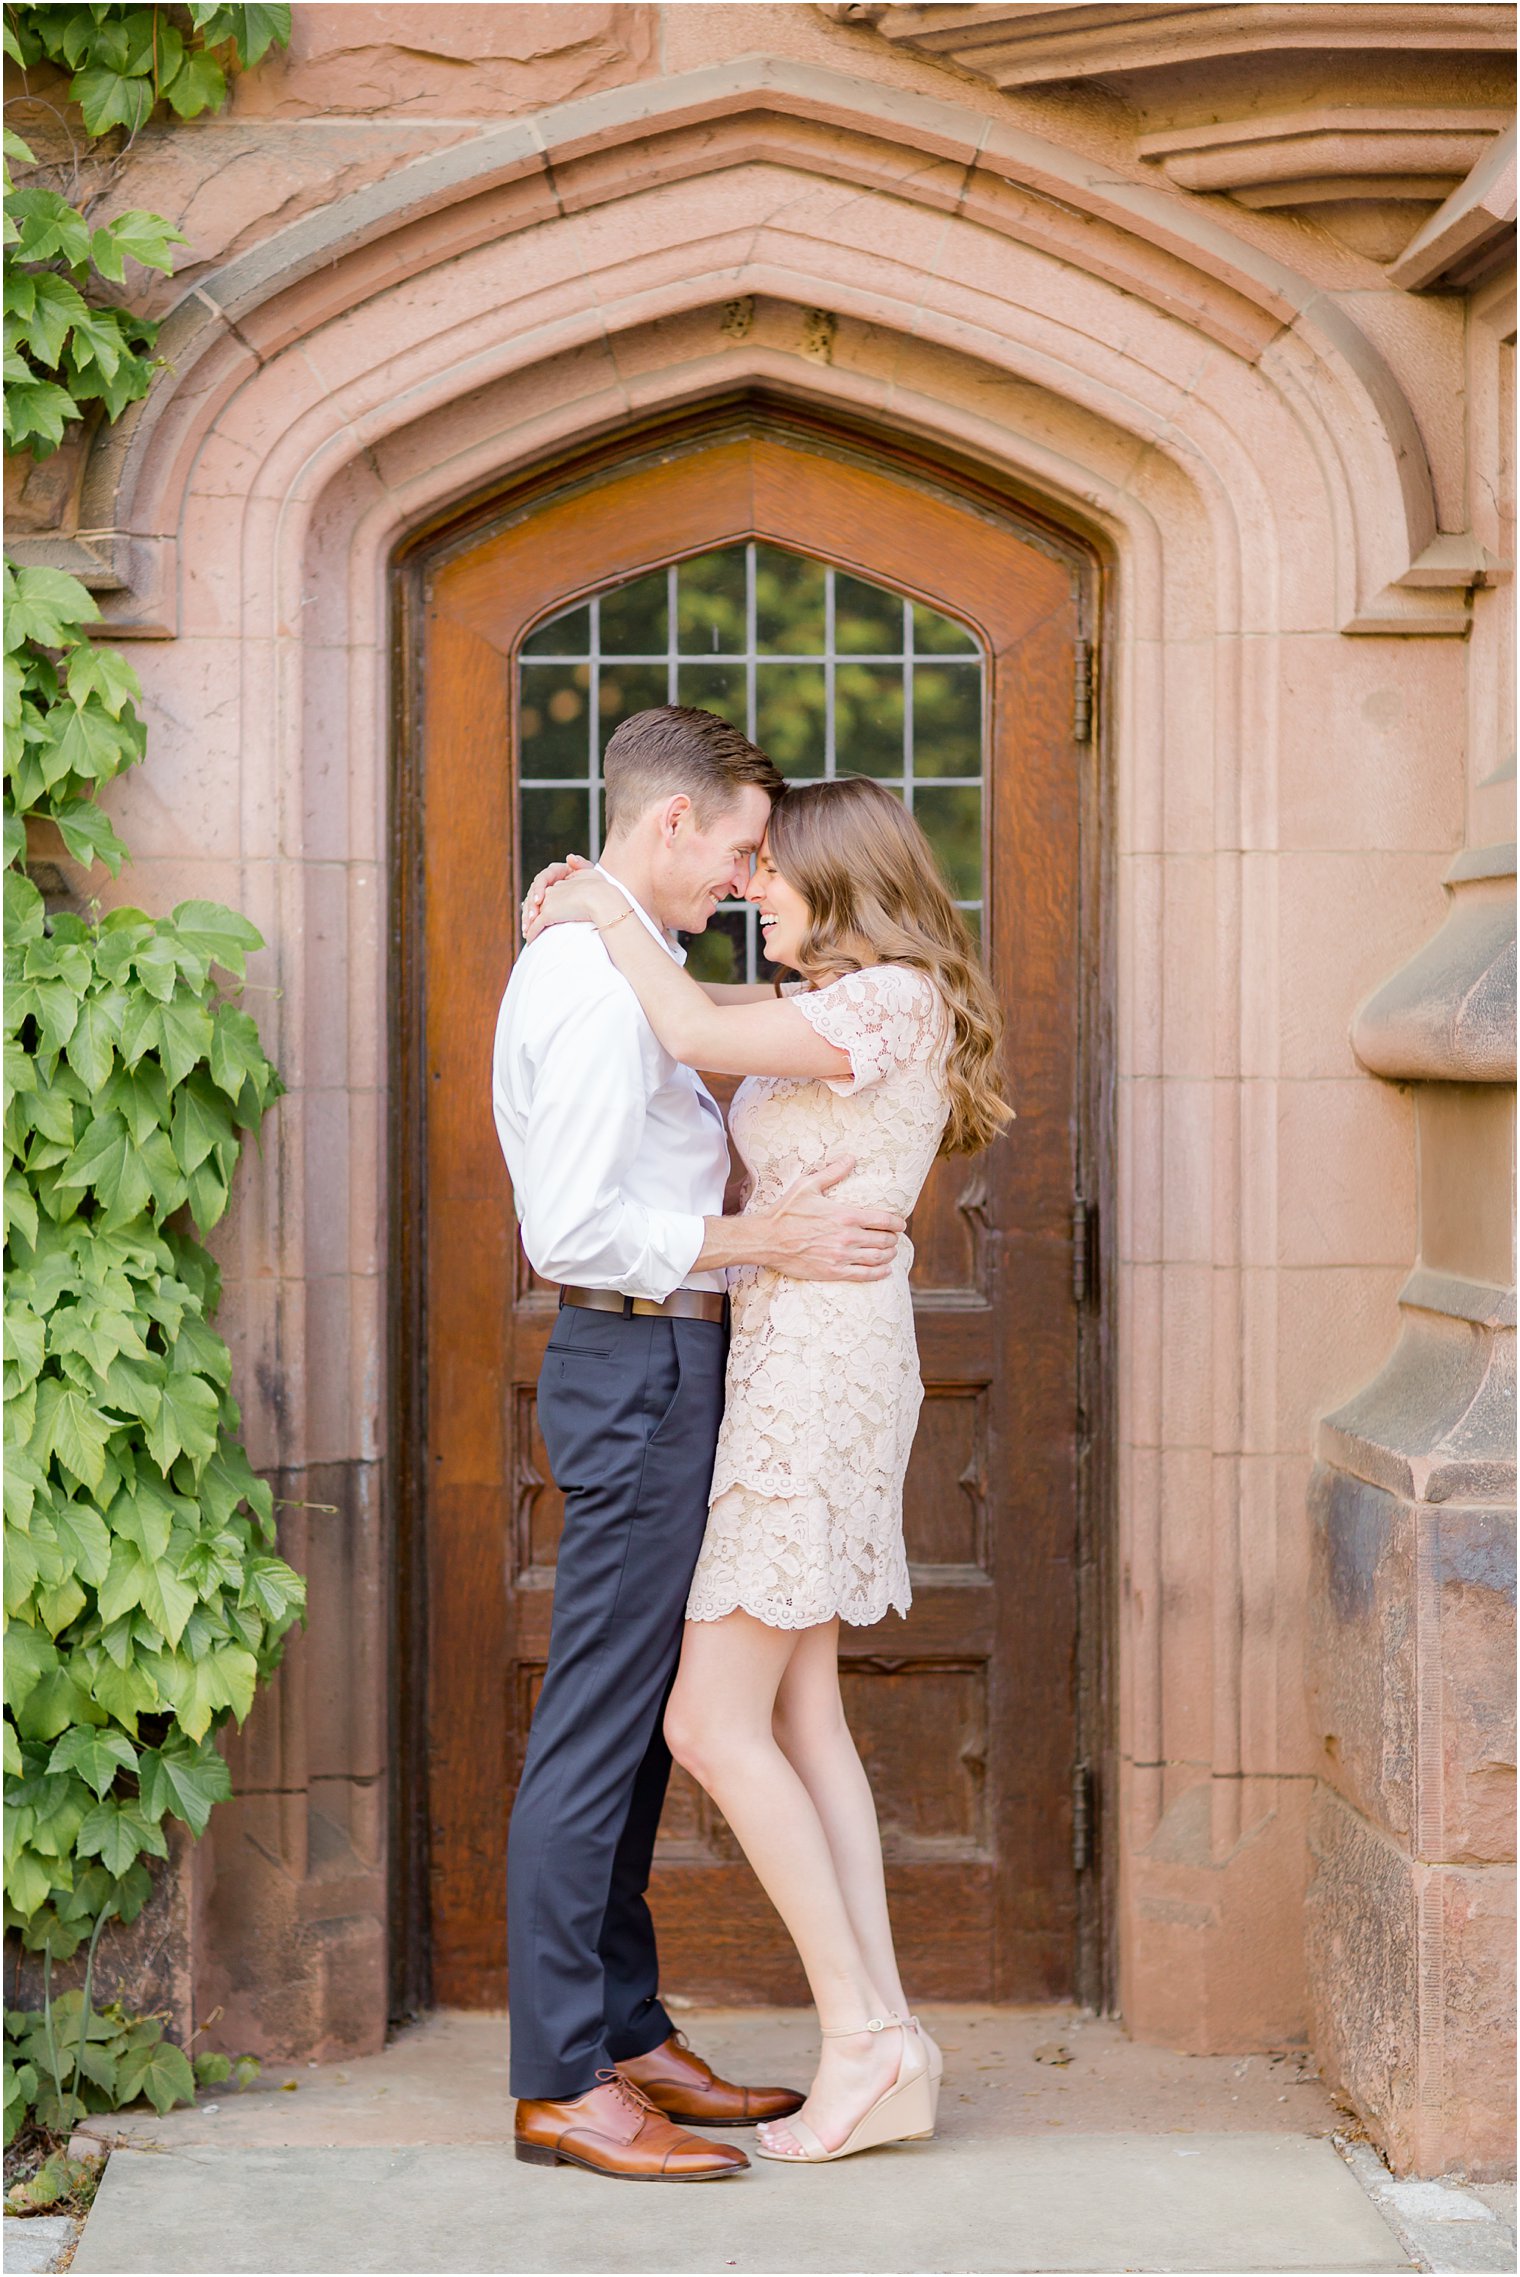 romantic engagement photo in a doorway